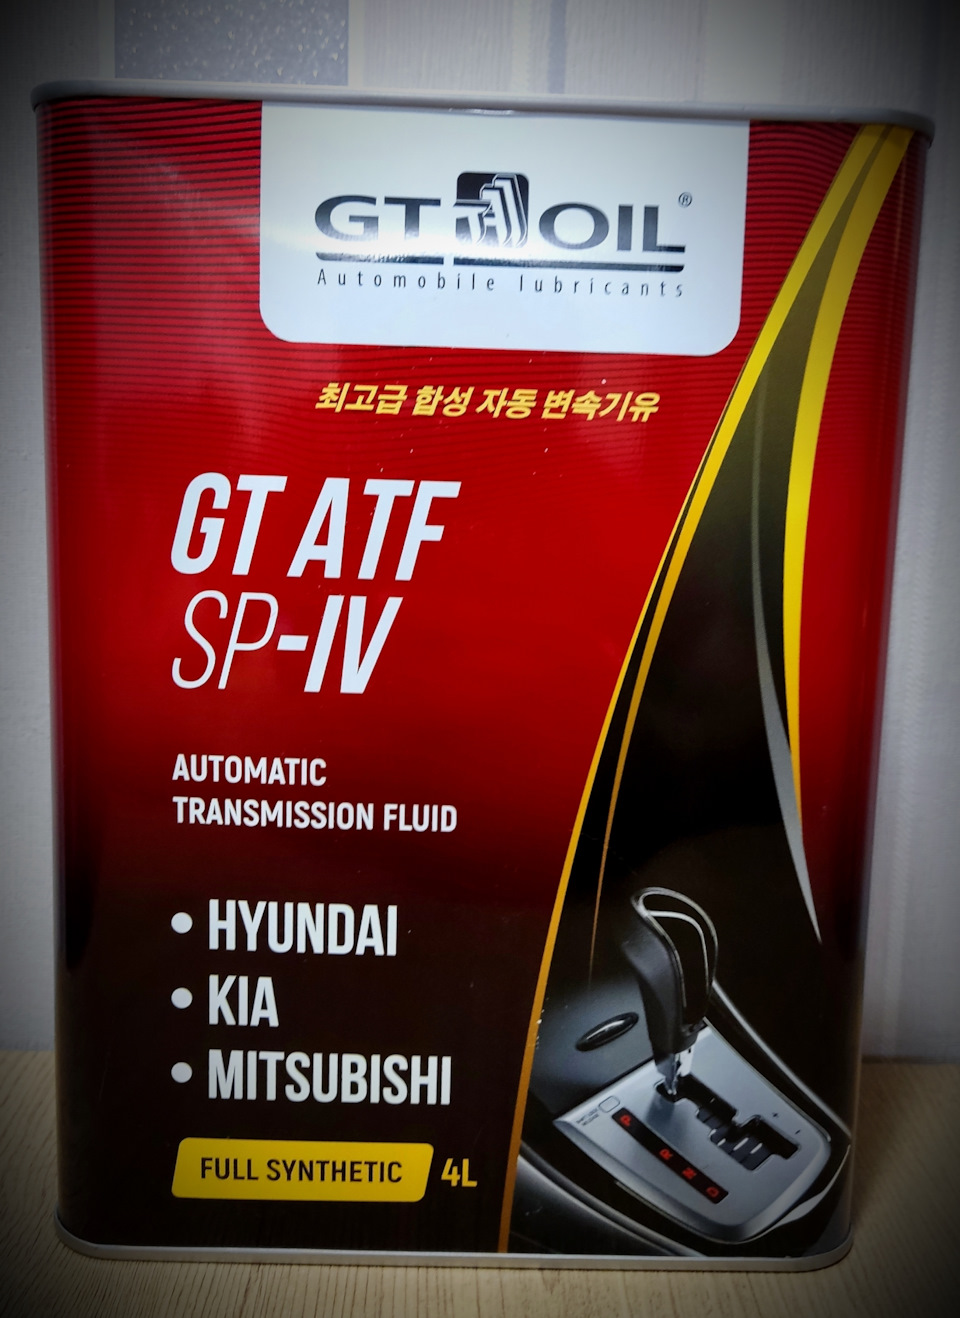 Gt atf. Gt Oil ATF SP-IV.